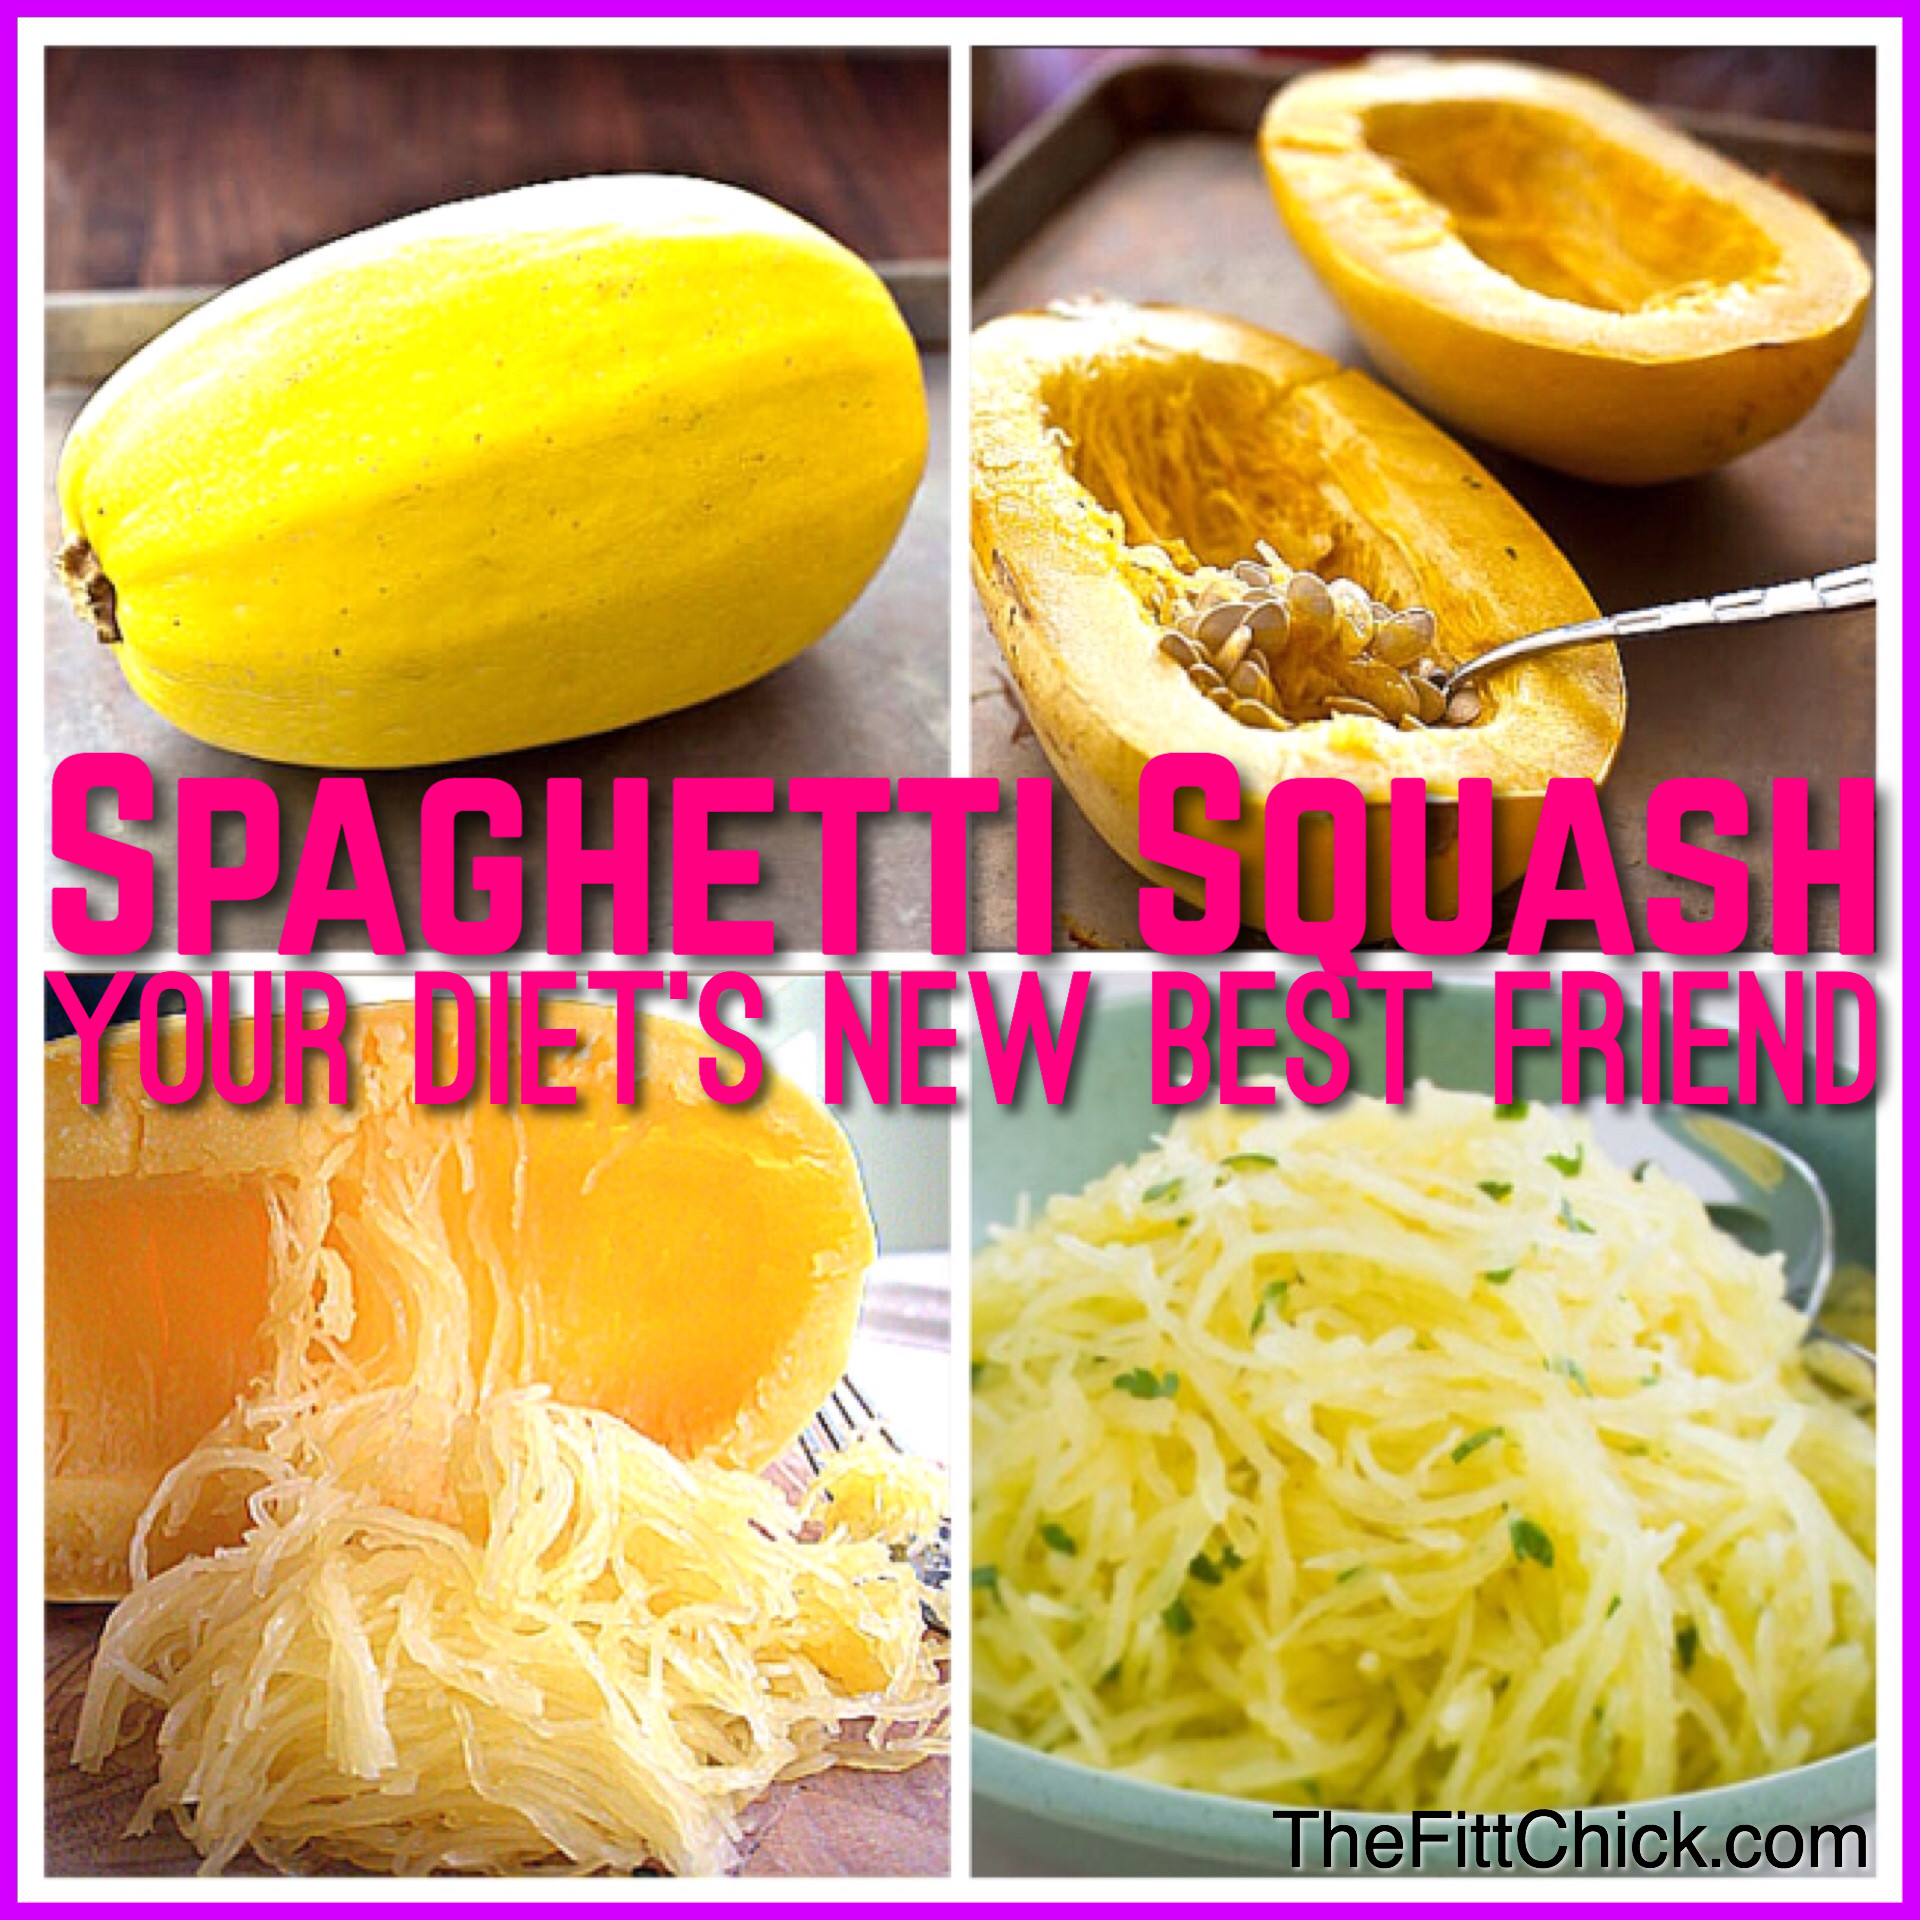 Fiber In Spaghetti Squash
 spaghetti squash fiber